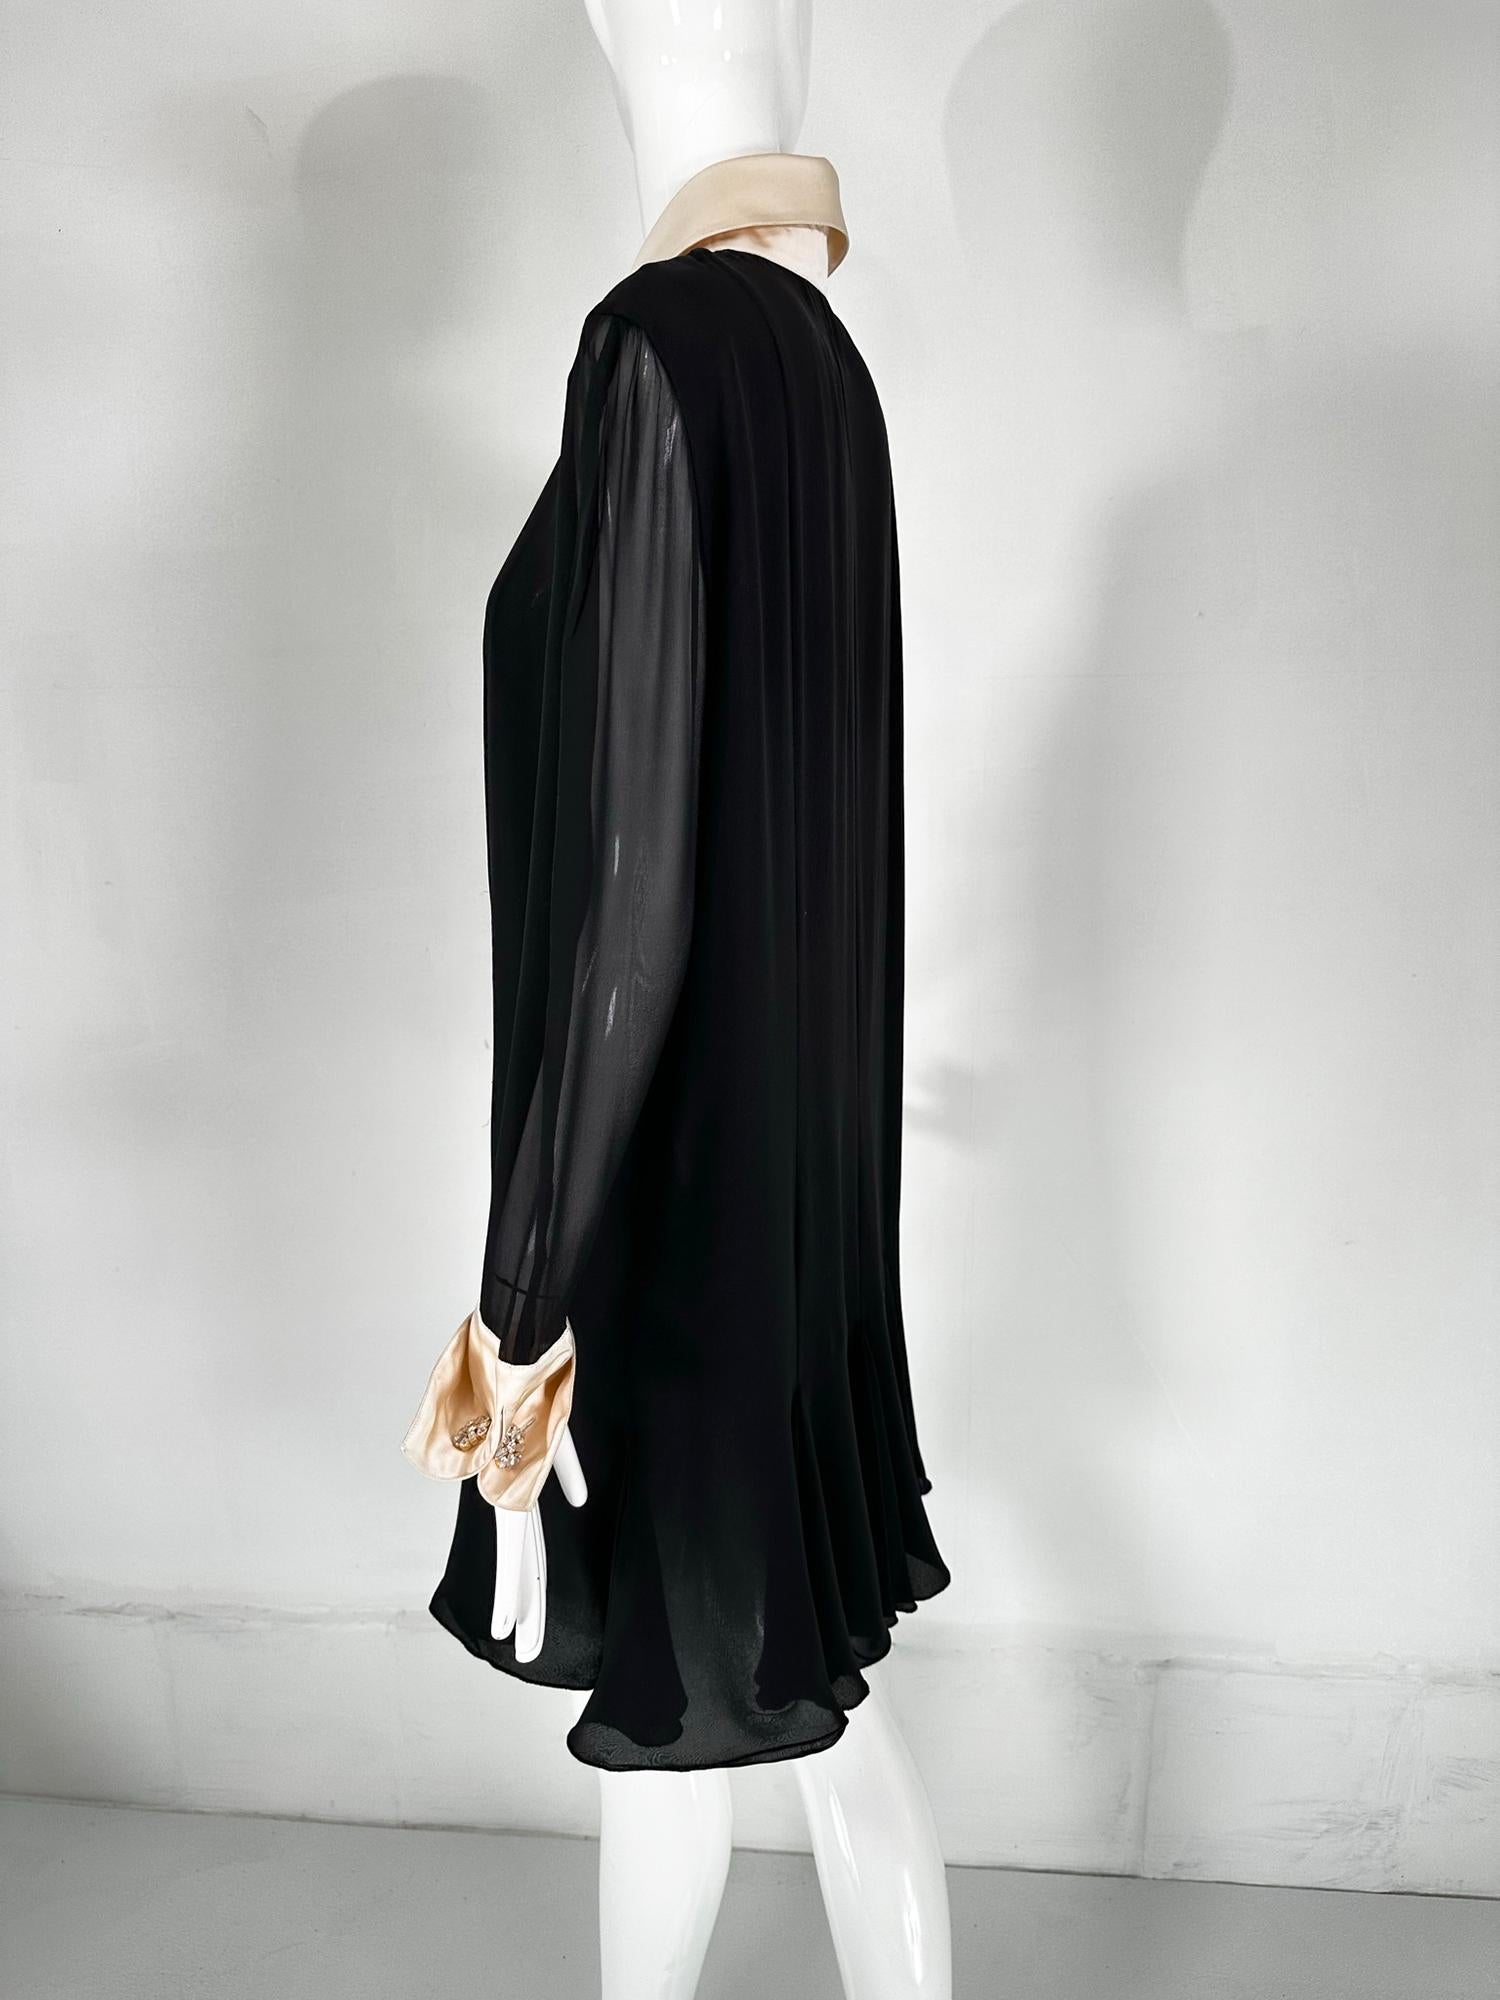 Christian Lacroix Black Silk Chiffon Dress With Off White Silk Collar & Cuffs  For Sale 3